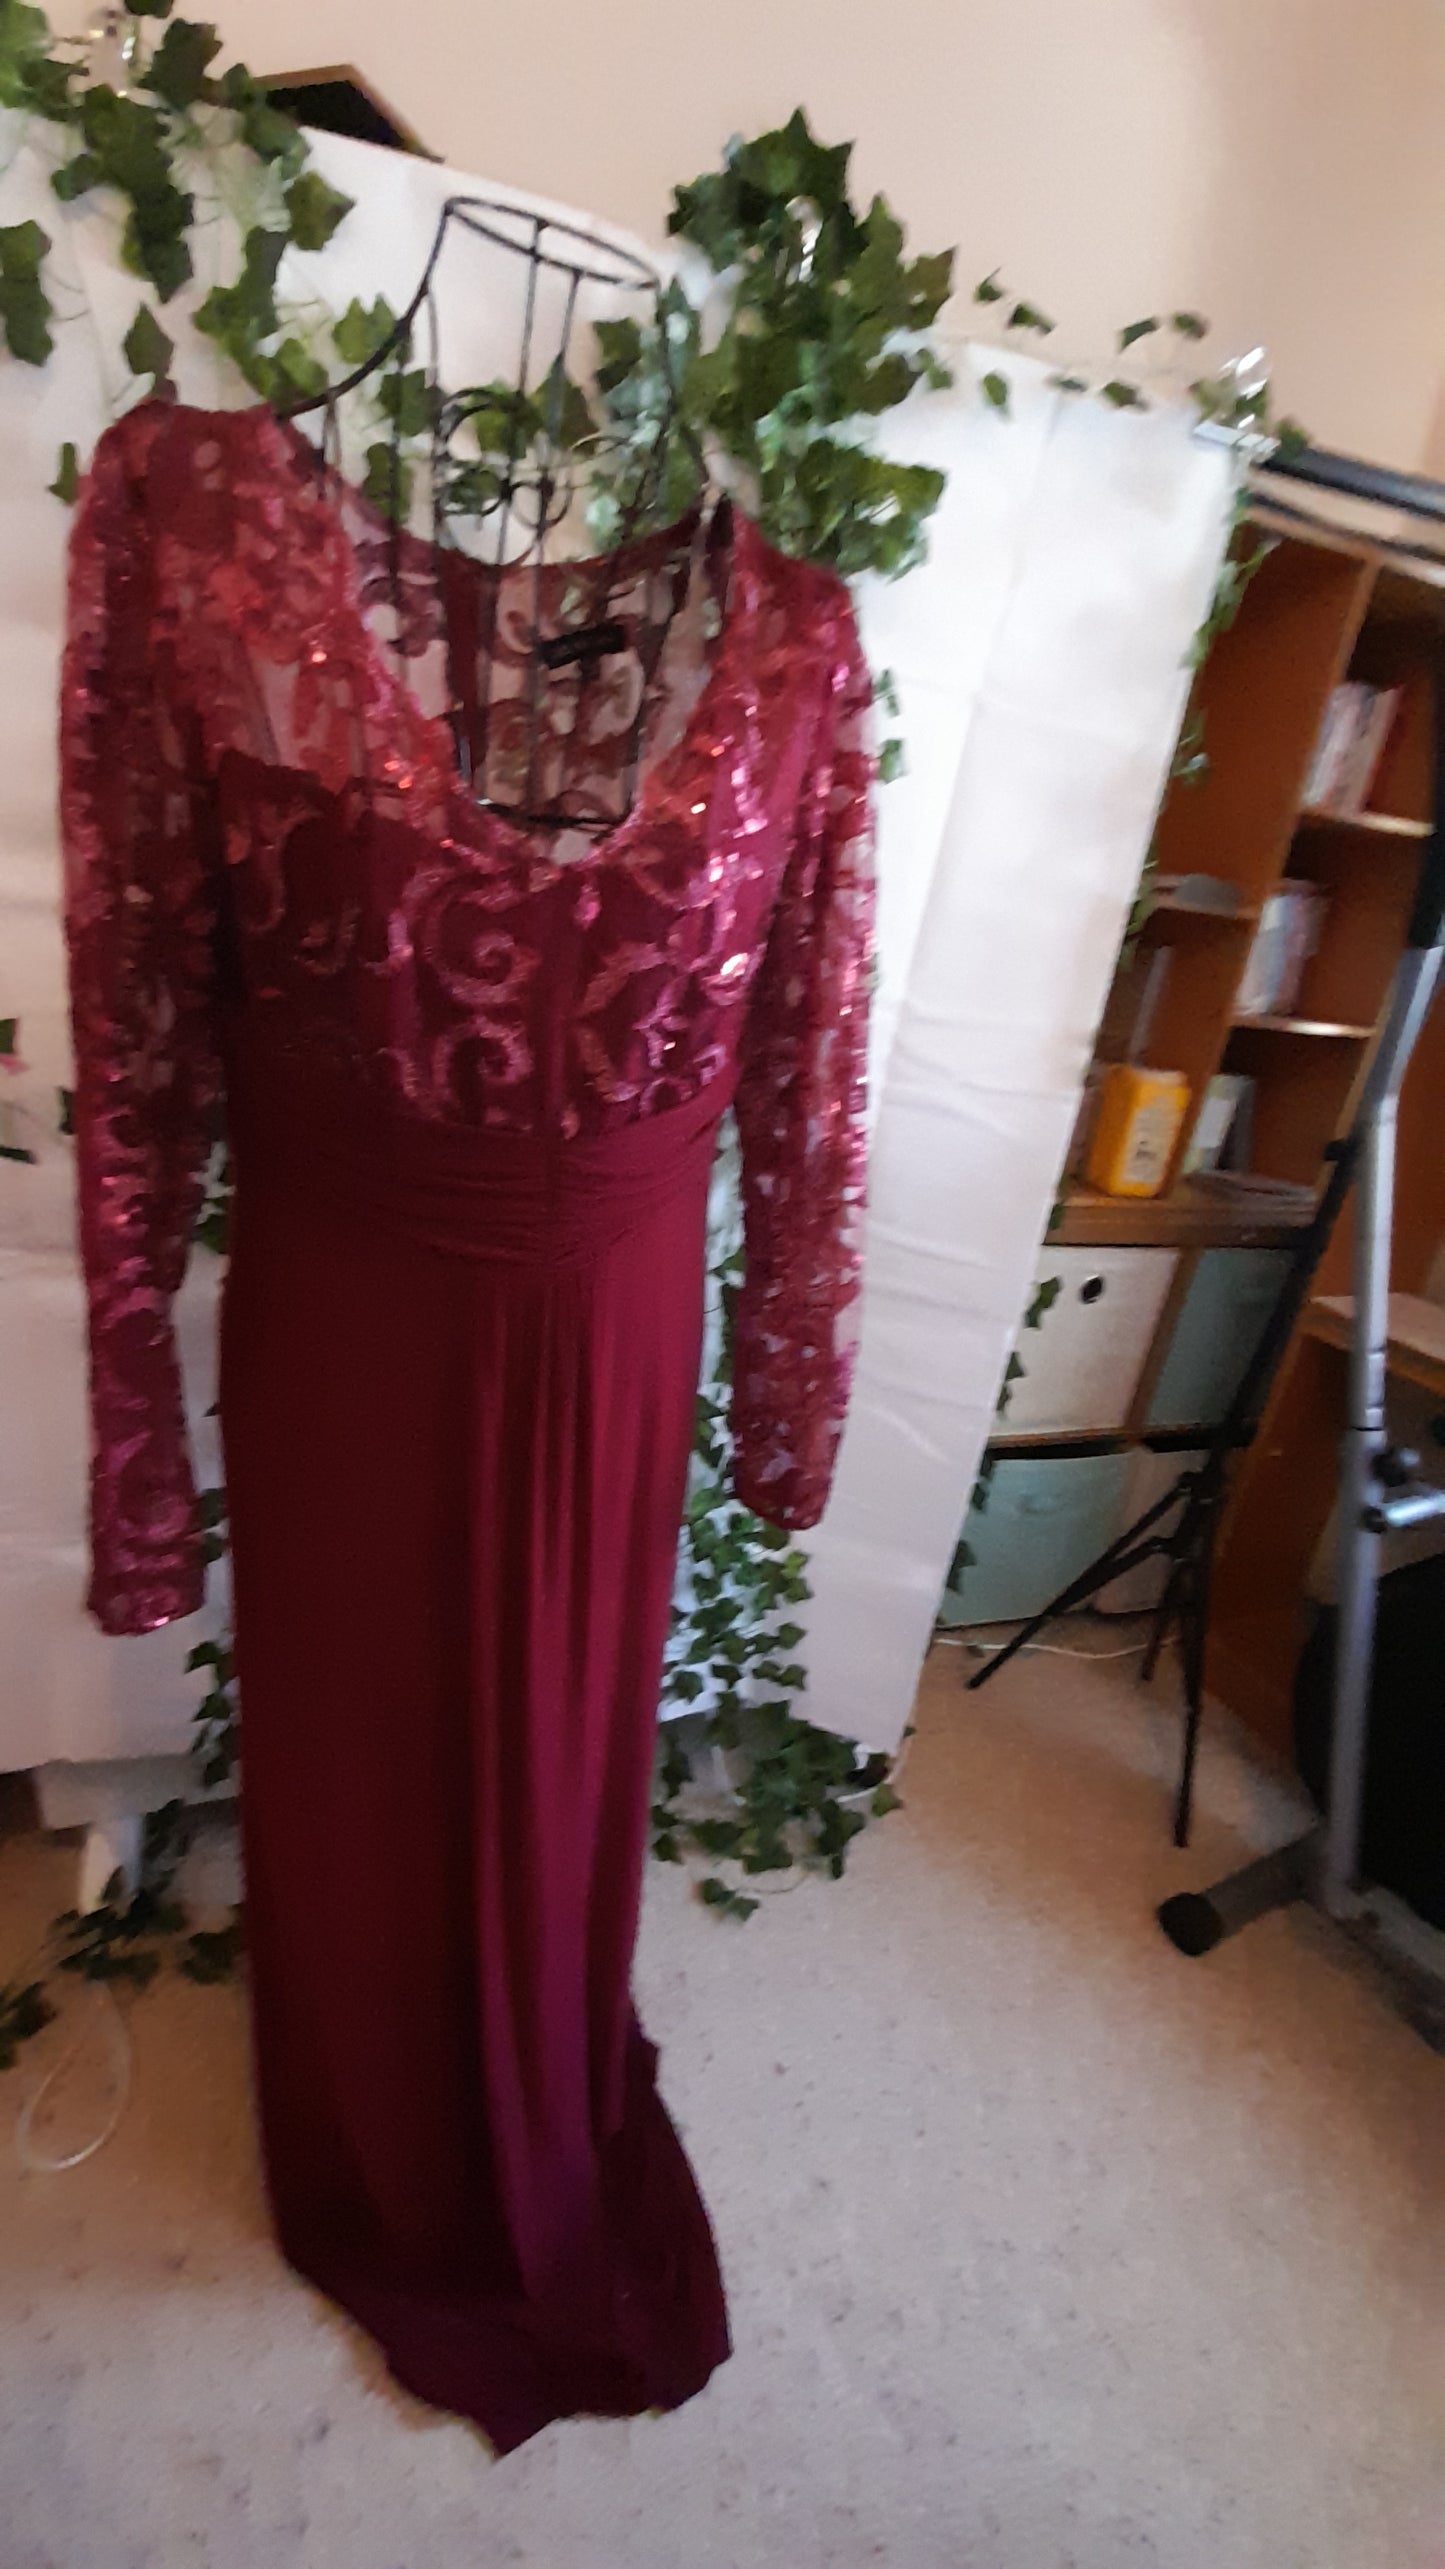 Gown - Liz Jordan Burgundy Ball Gown Size 14